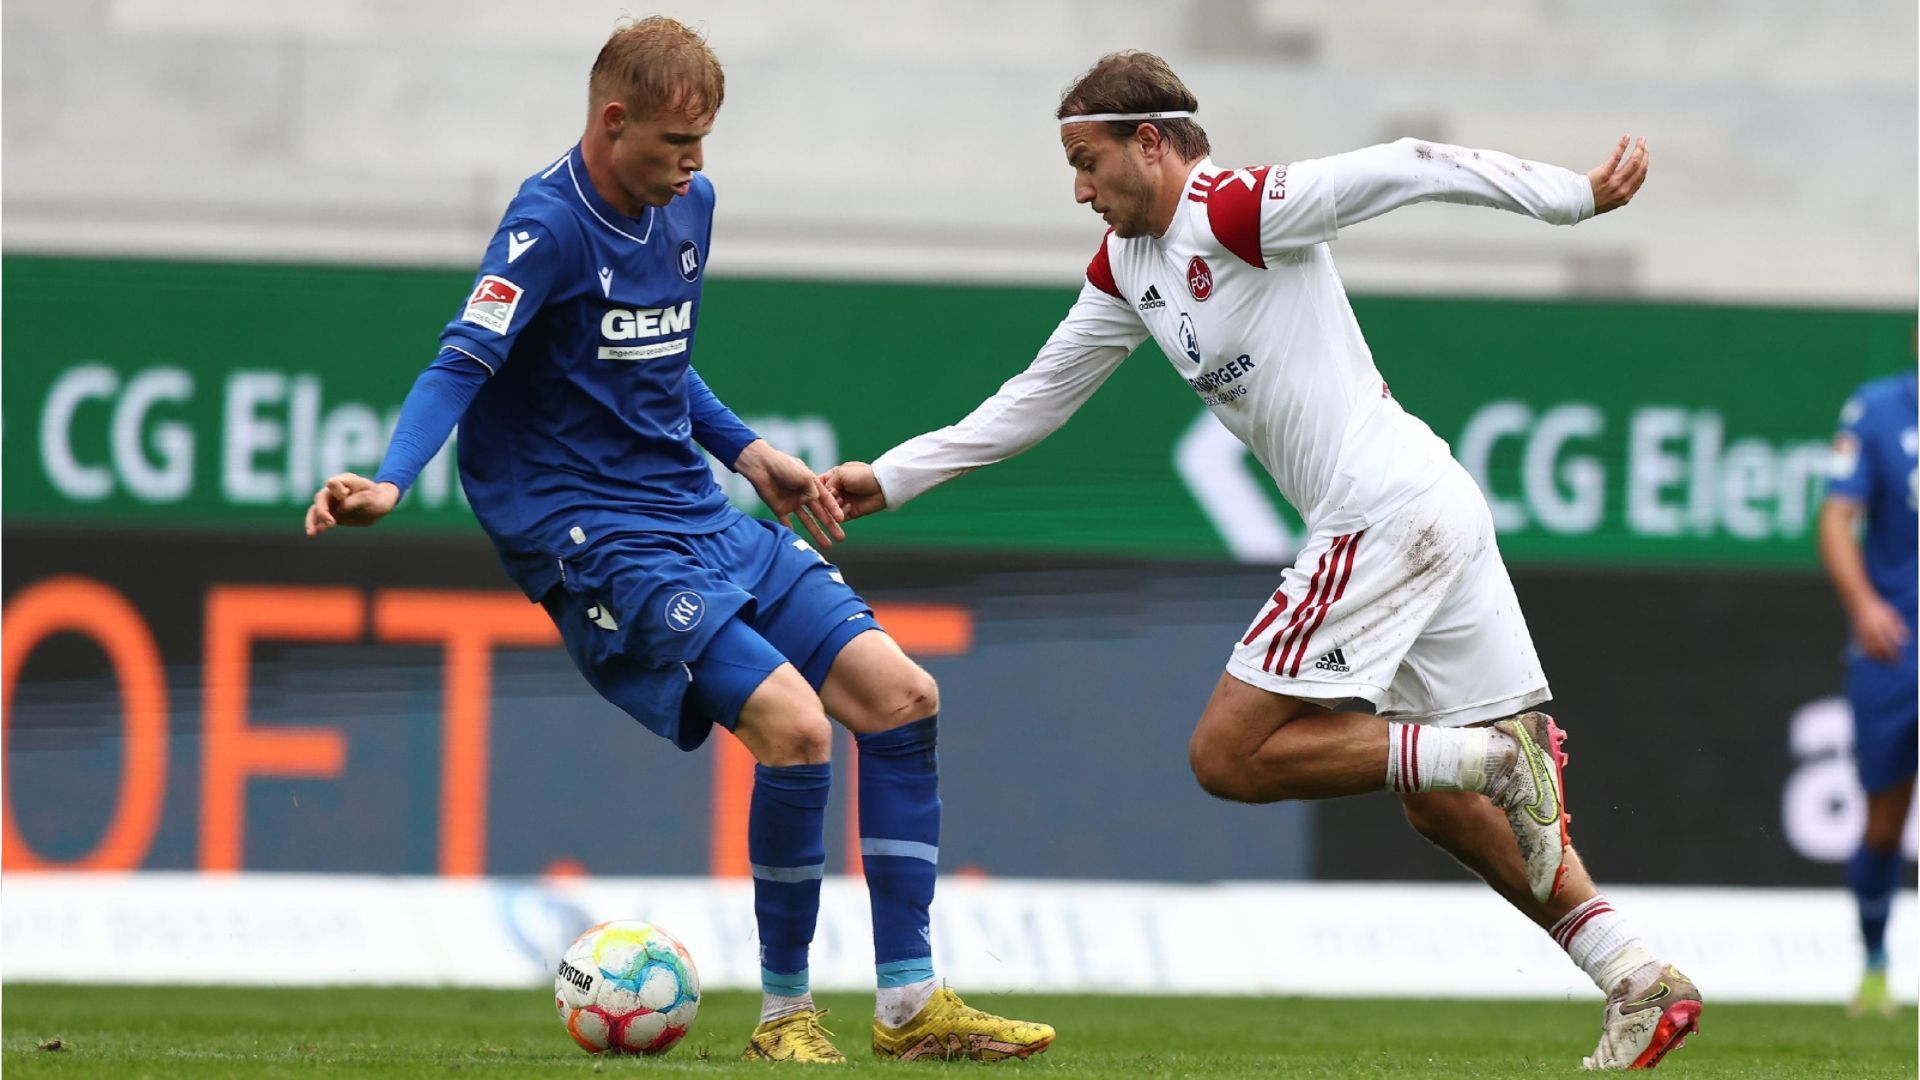 0:3 in Karlsruhe: Two ex-Nurembergers score against the club